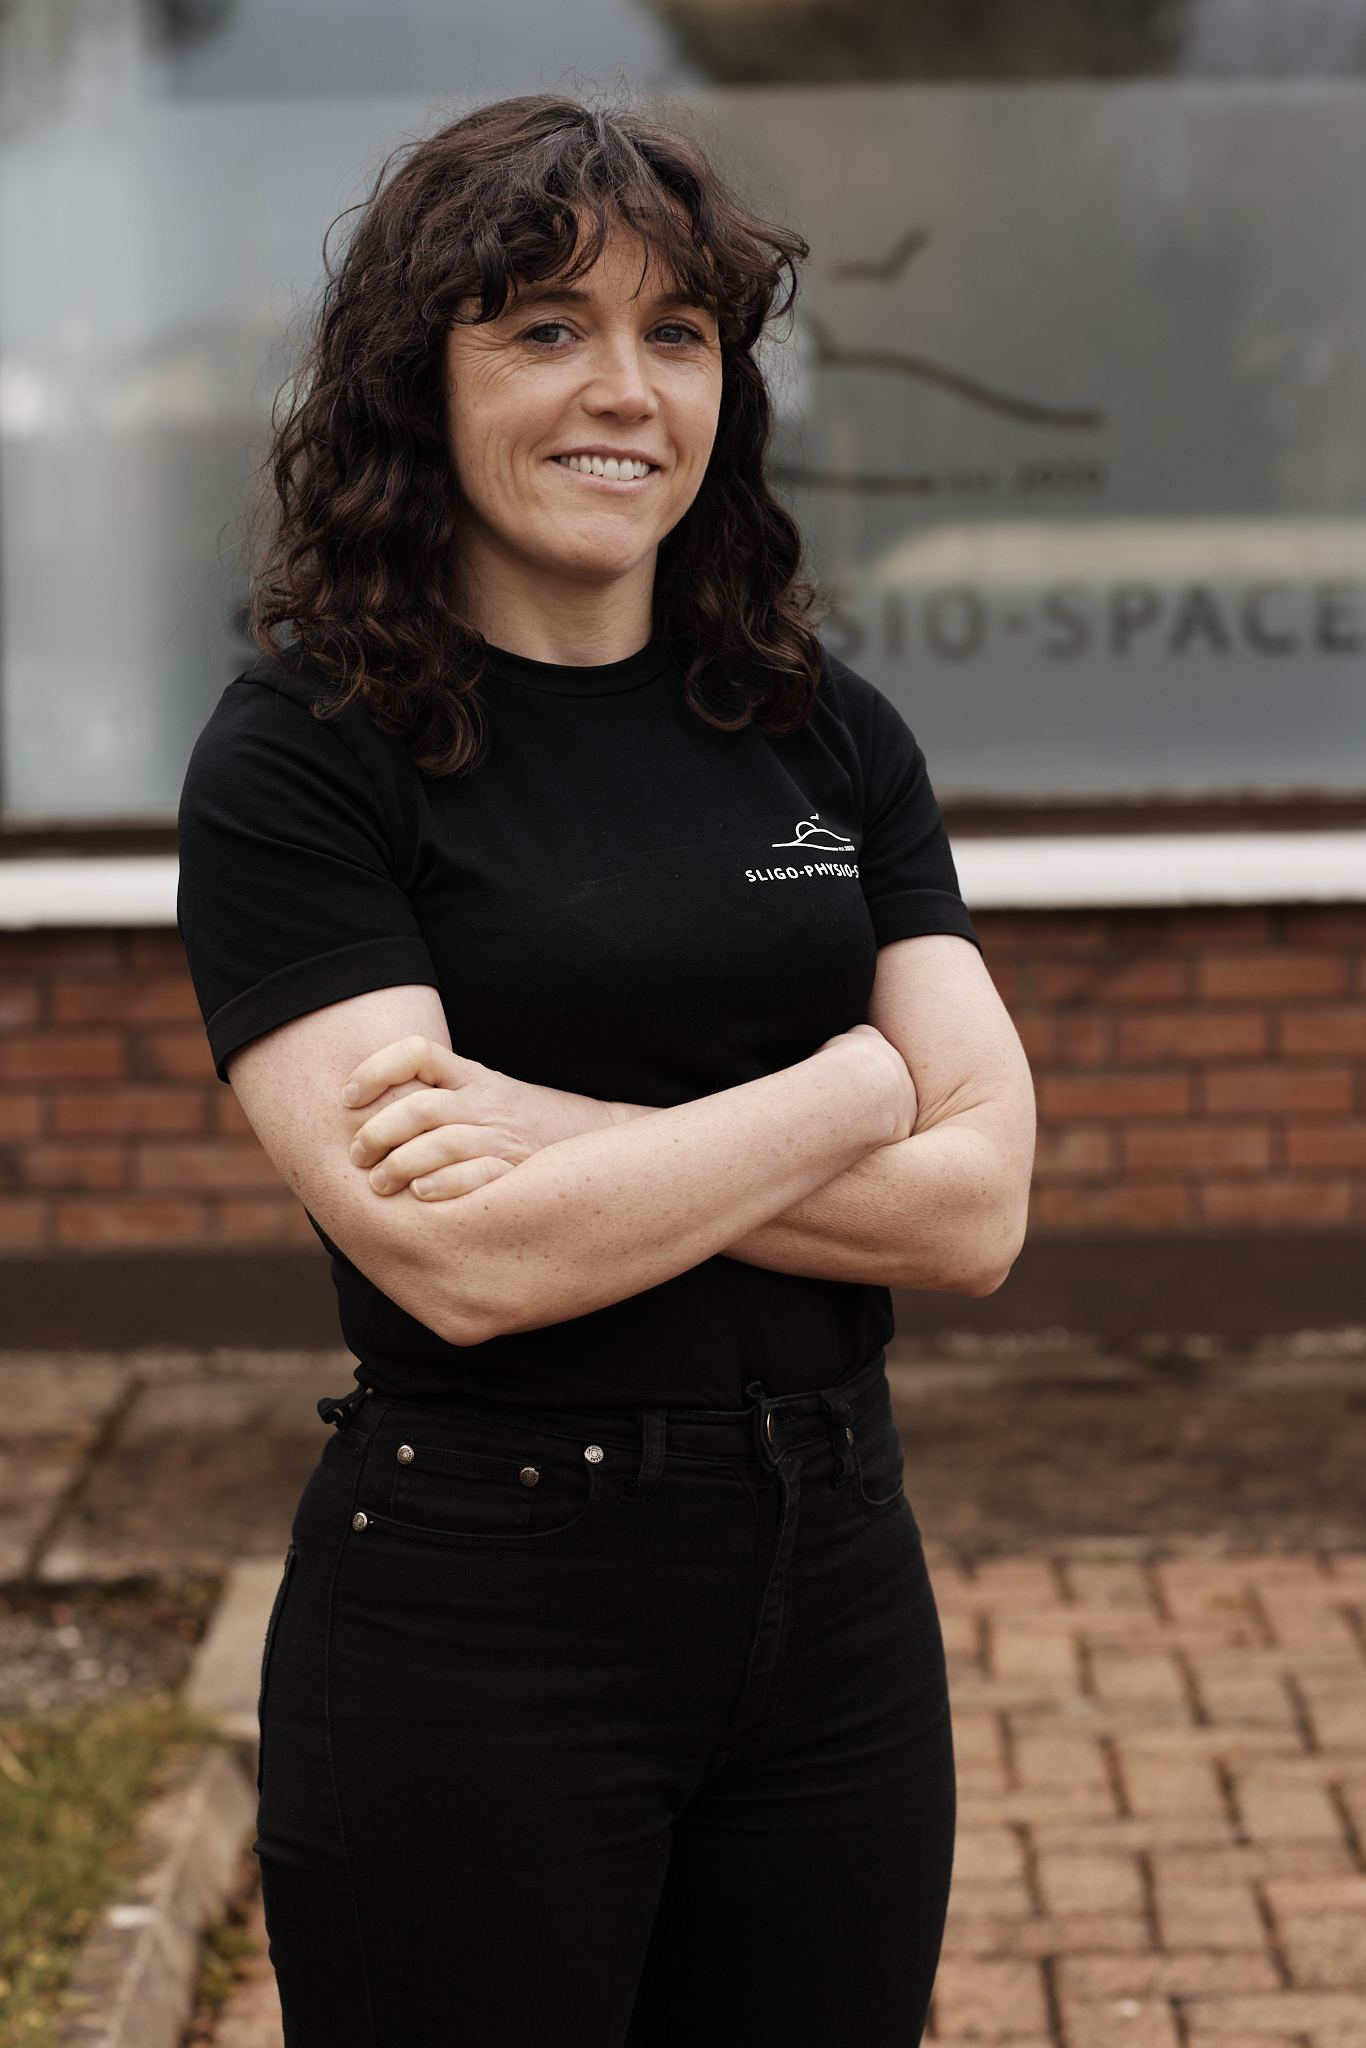 Sligo Physio Space Physiotherapist, Claire McGuinness outside her premises in Strandhill Sligo